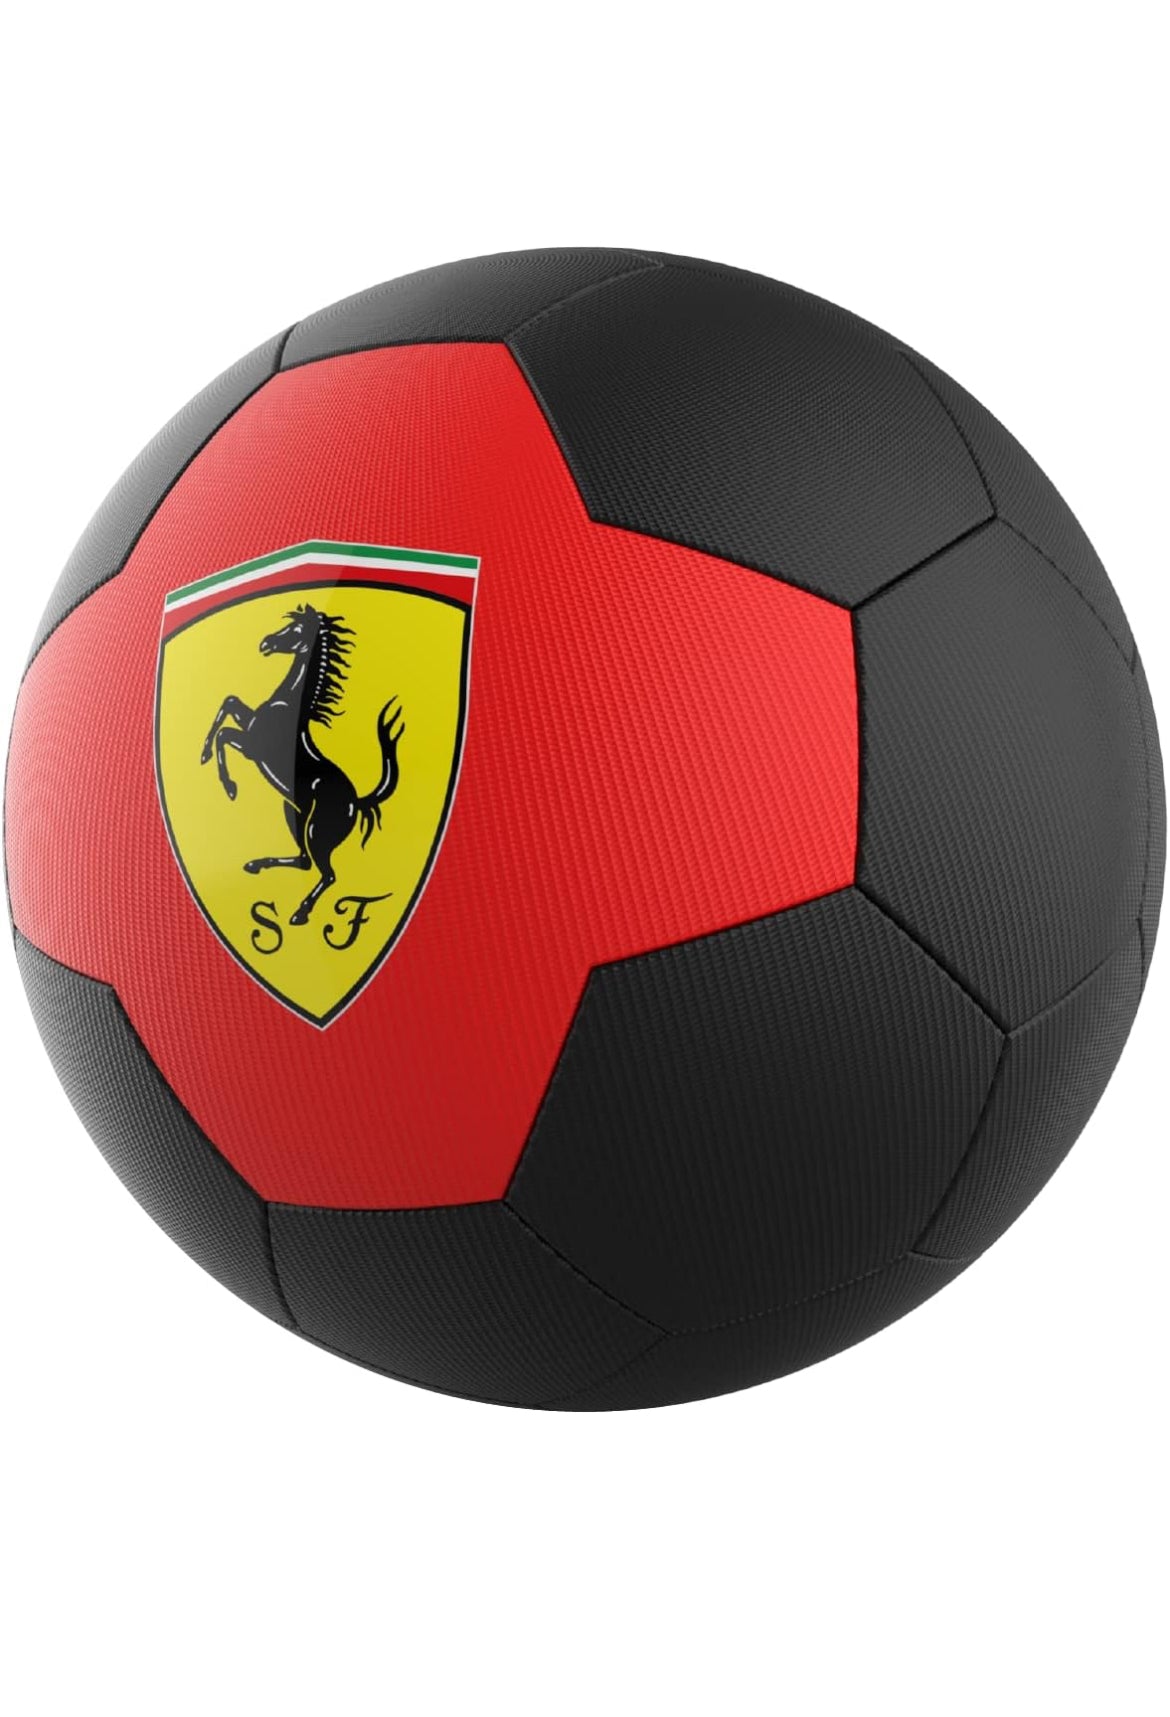 Ferrari Indoor Soccer Ball